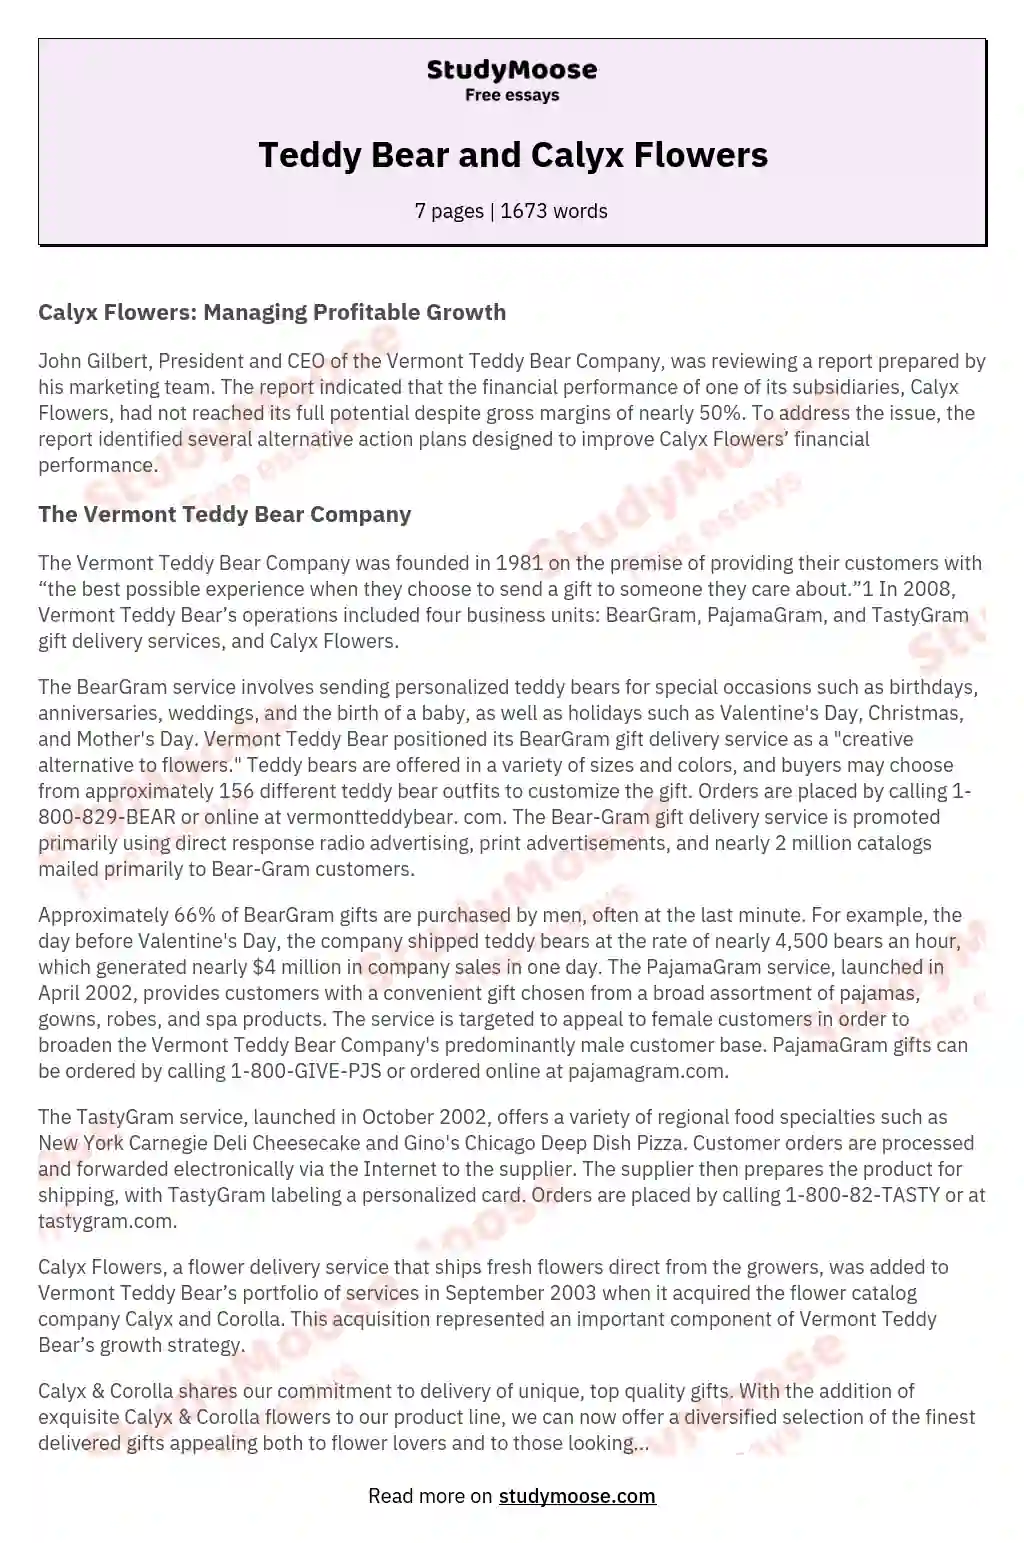 Maximizing Calyx Flowers' Financial Performance essay